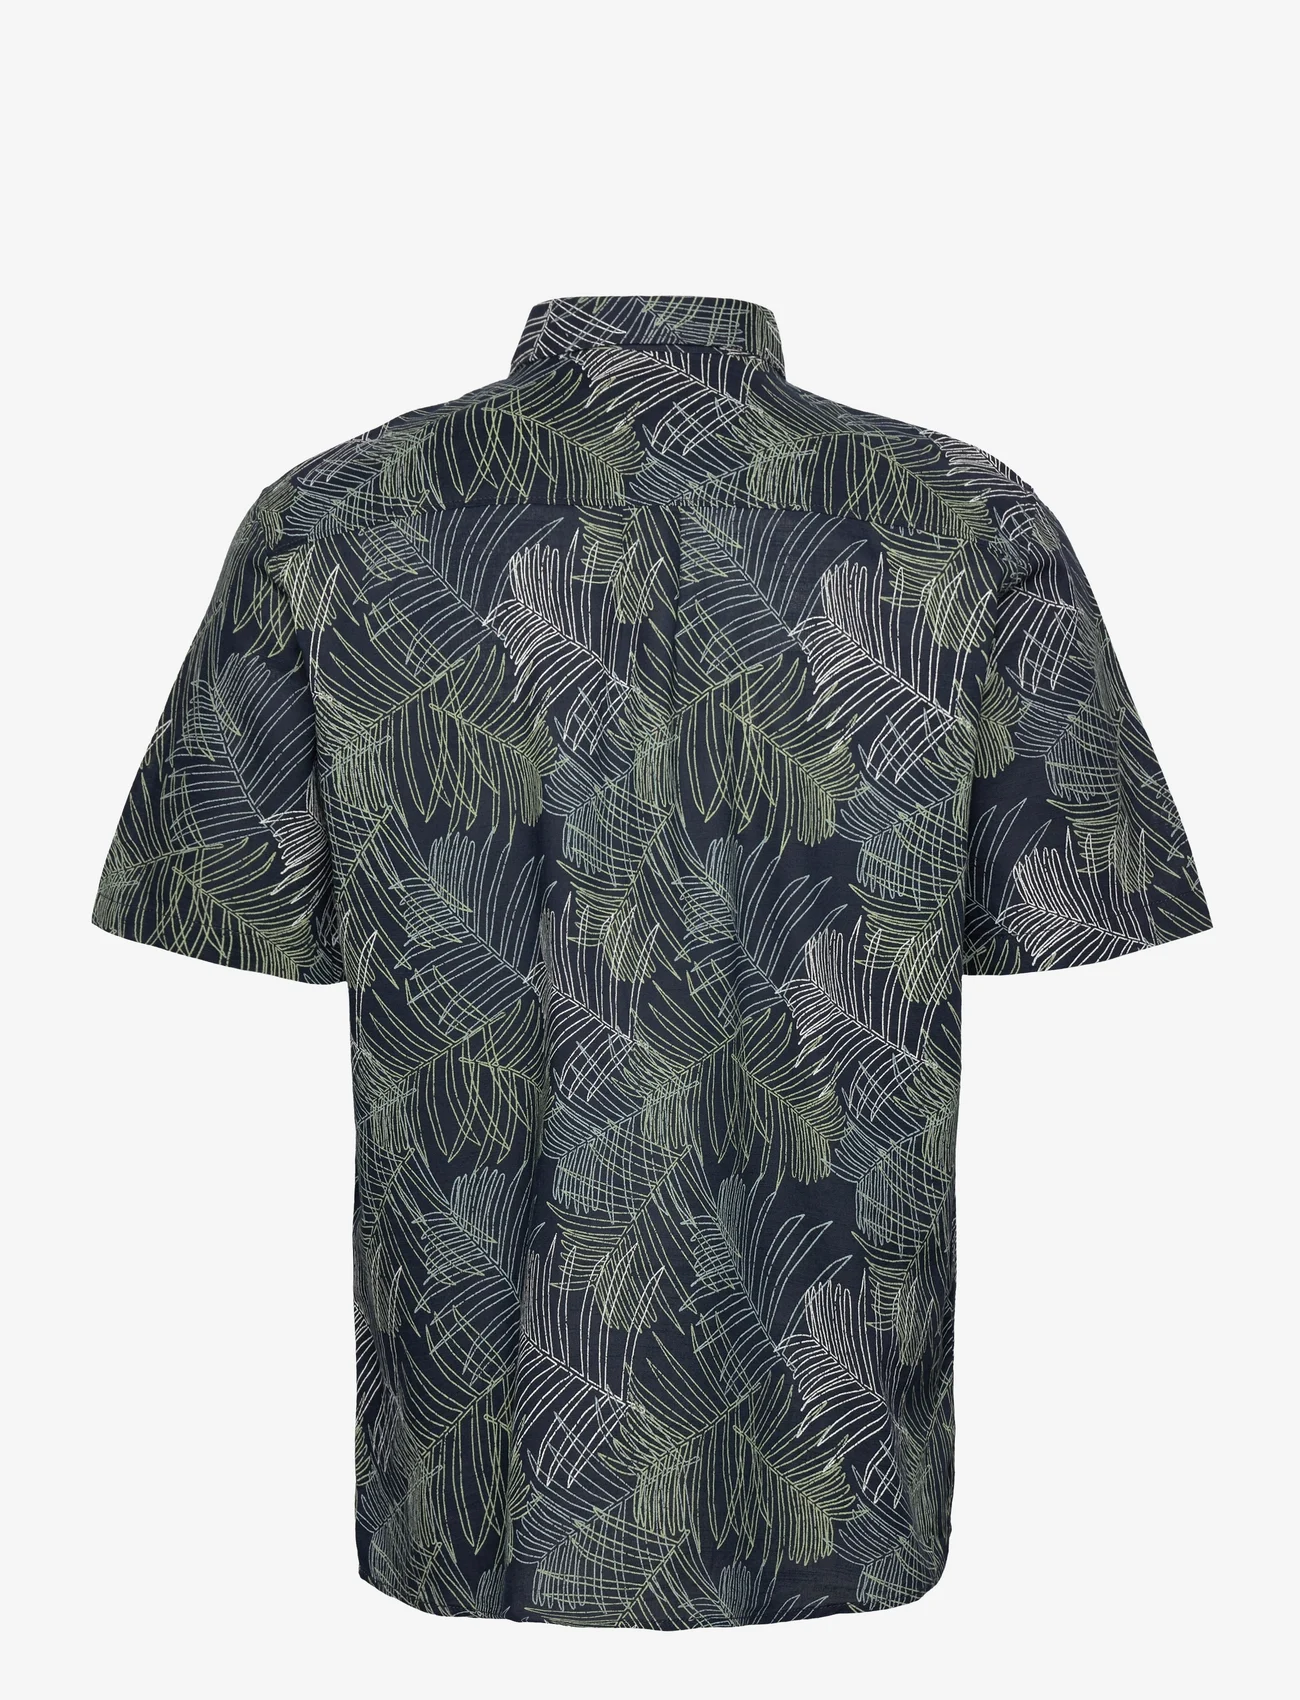 Tom Tailor - comfort printed shirt - lyhythihaiset kauluspaidat - navy multicolor leaf design - 1